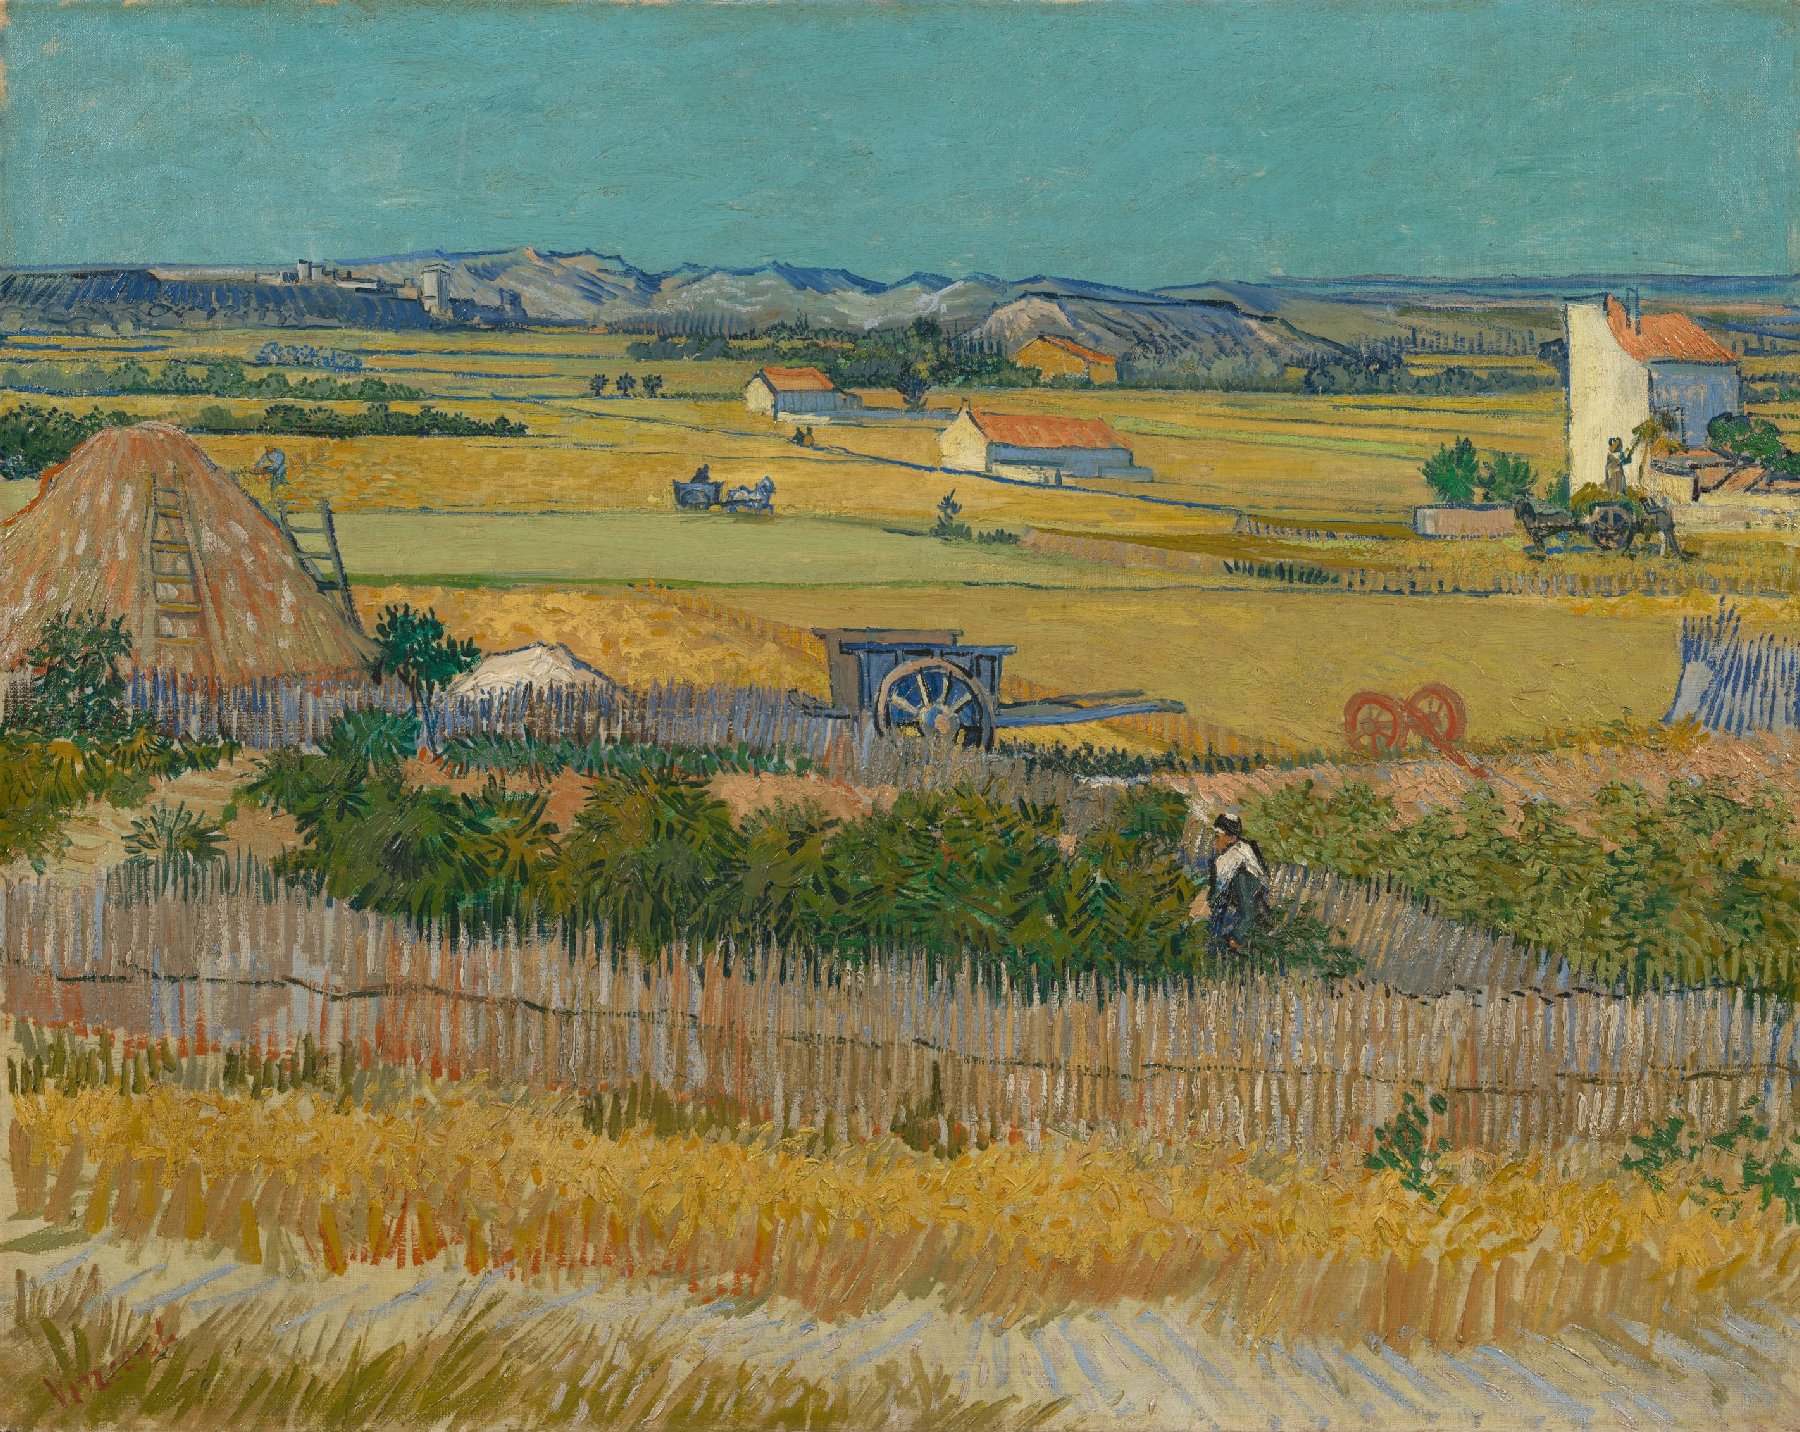 Zbiory by Vincent van Gogh - czerwiec 1888 - 73,4 x 91,8 cm 